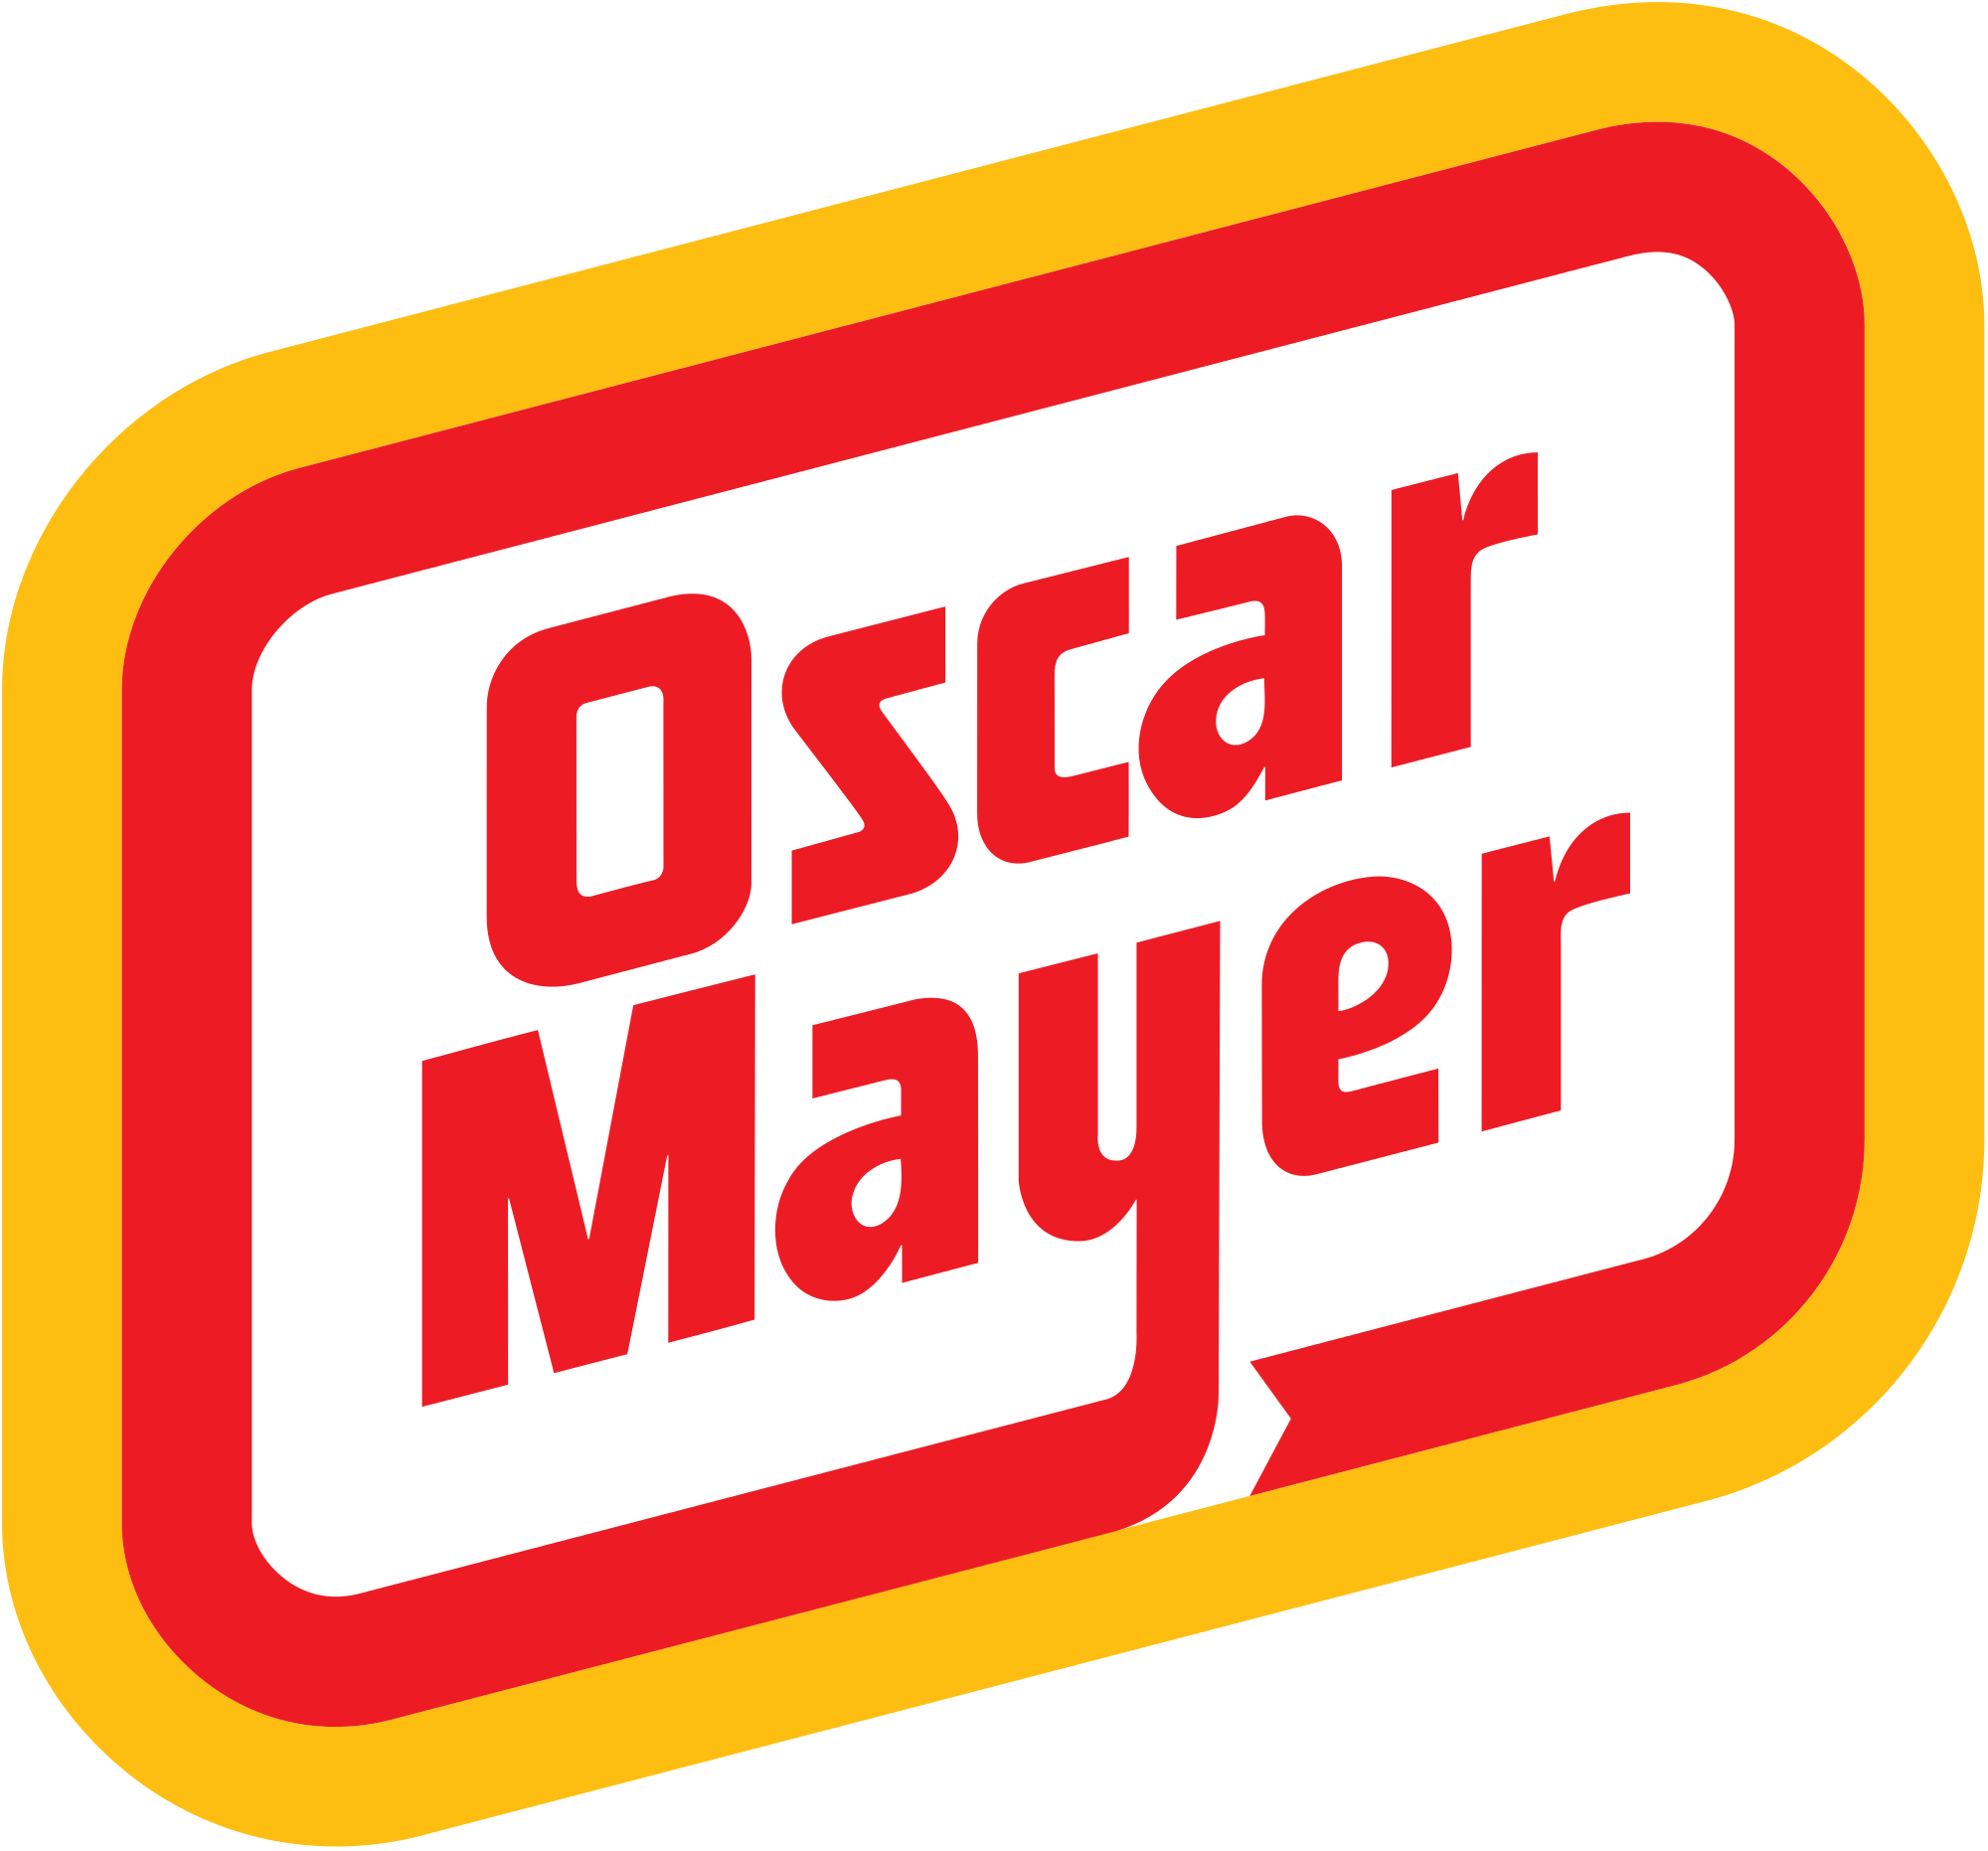 Answer: Oscar Mayer 